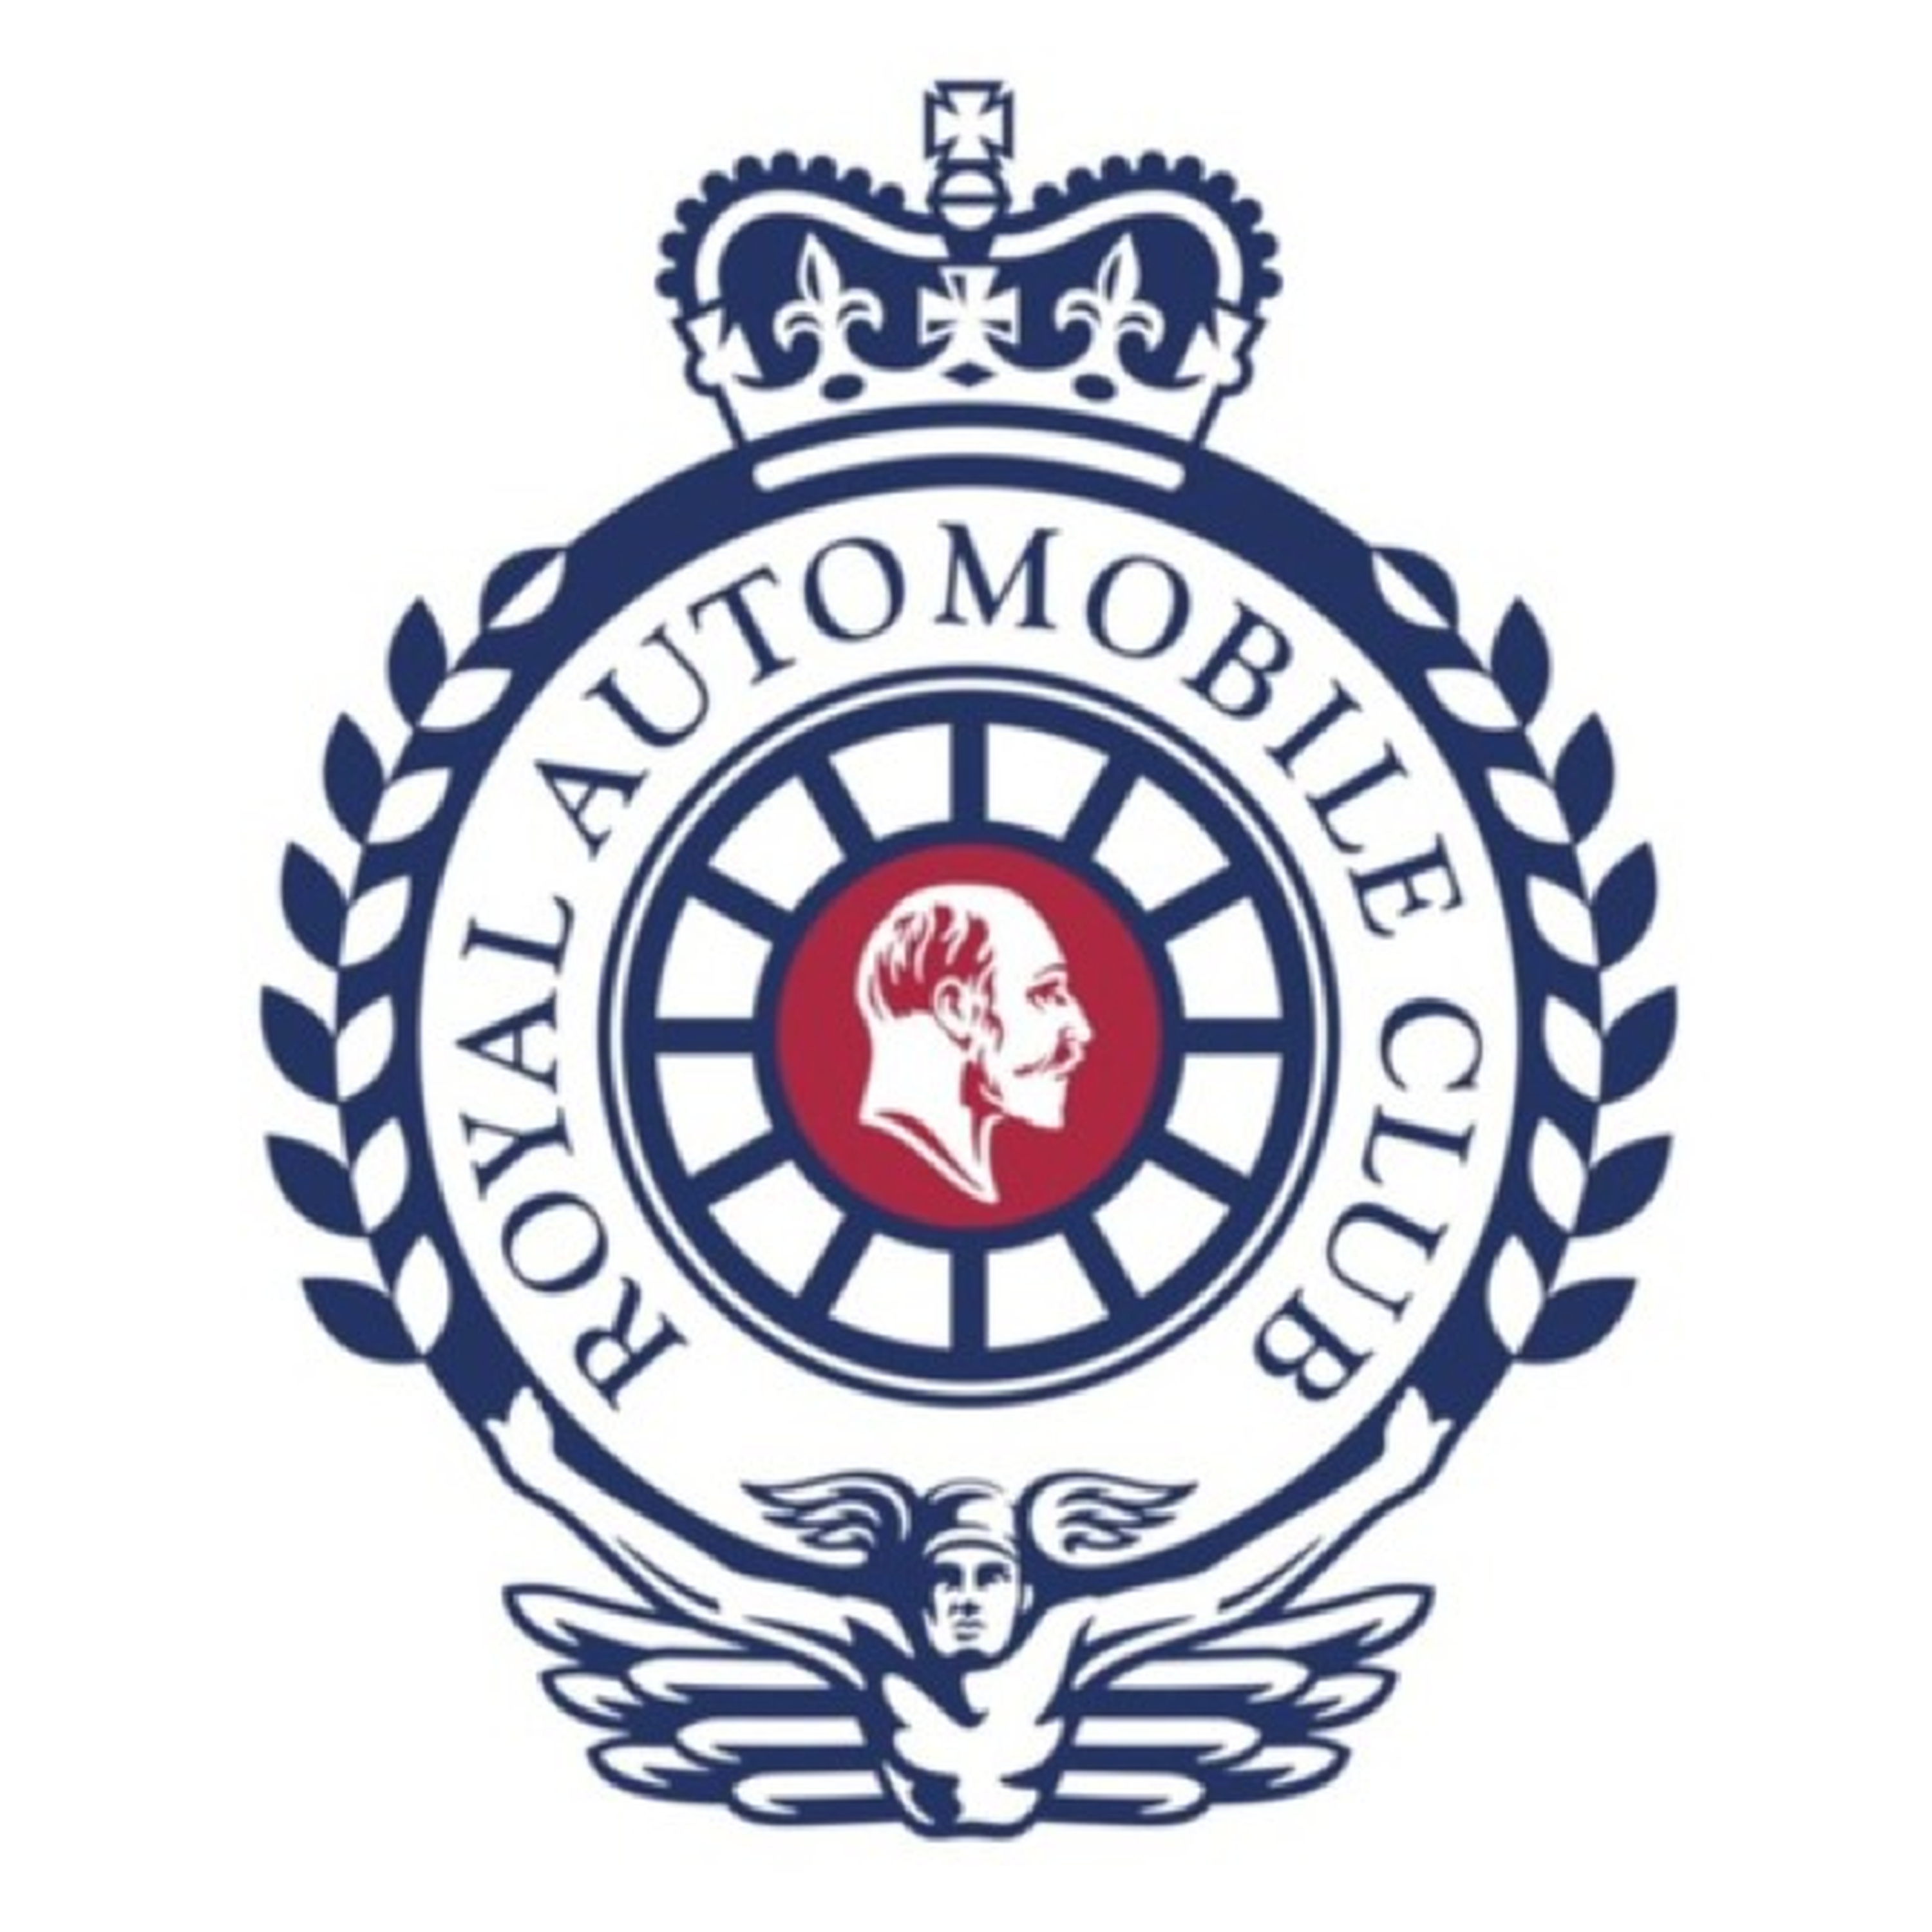 Stuart Turner: Royal Automobile Club Talk Show in association with Motor Sport